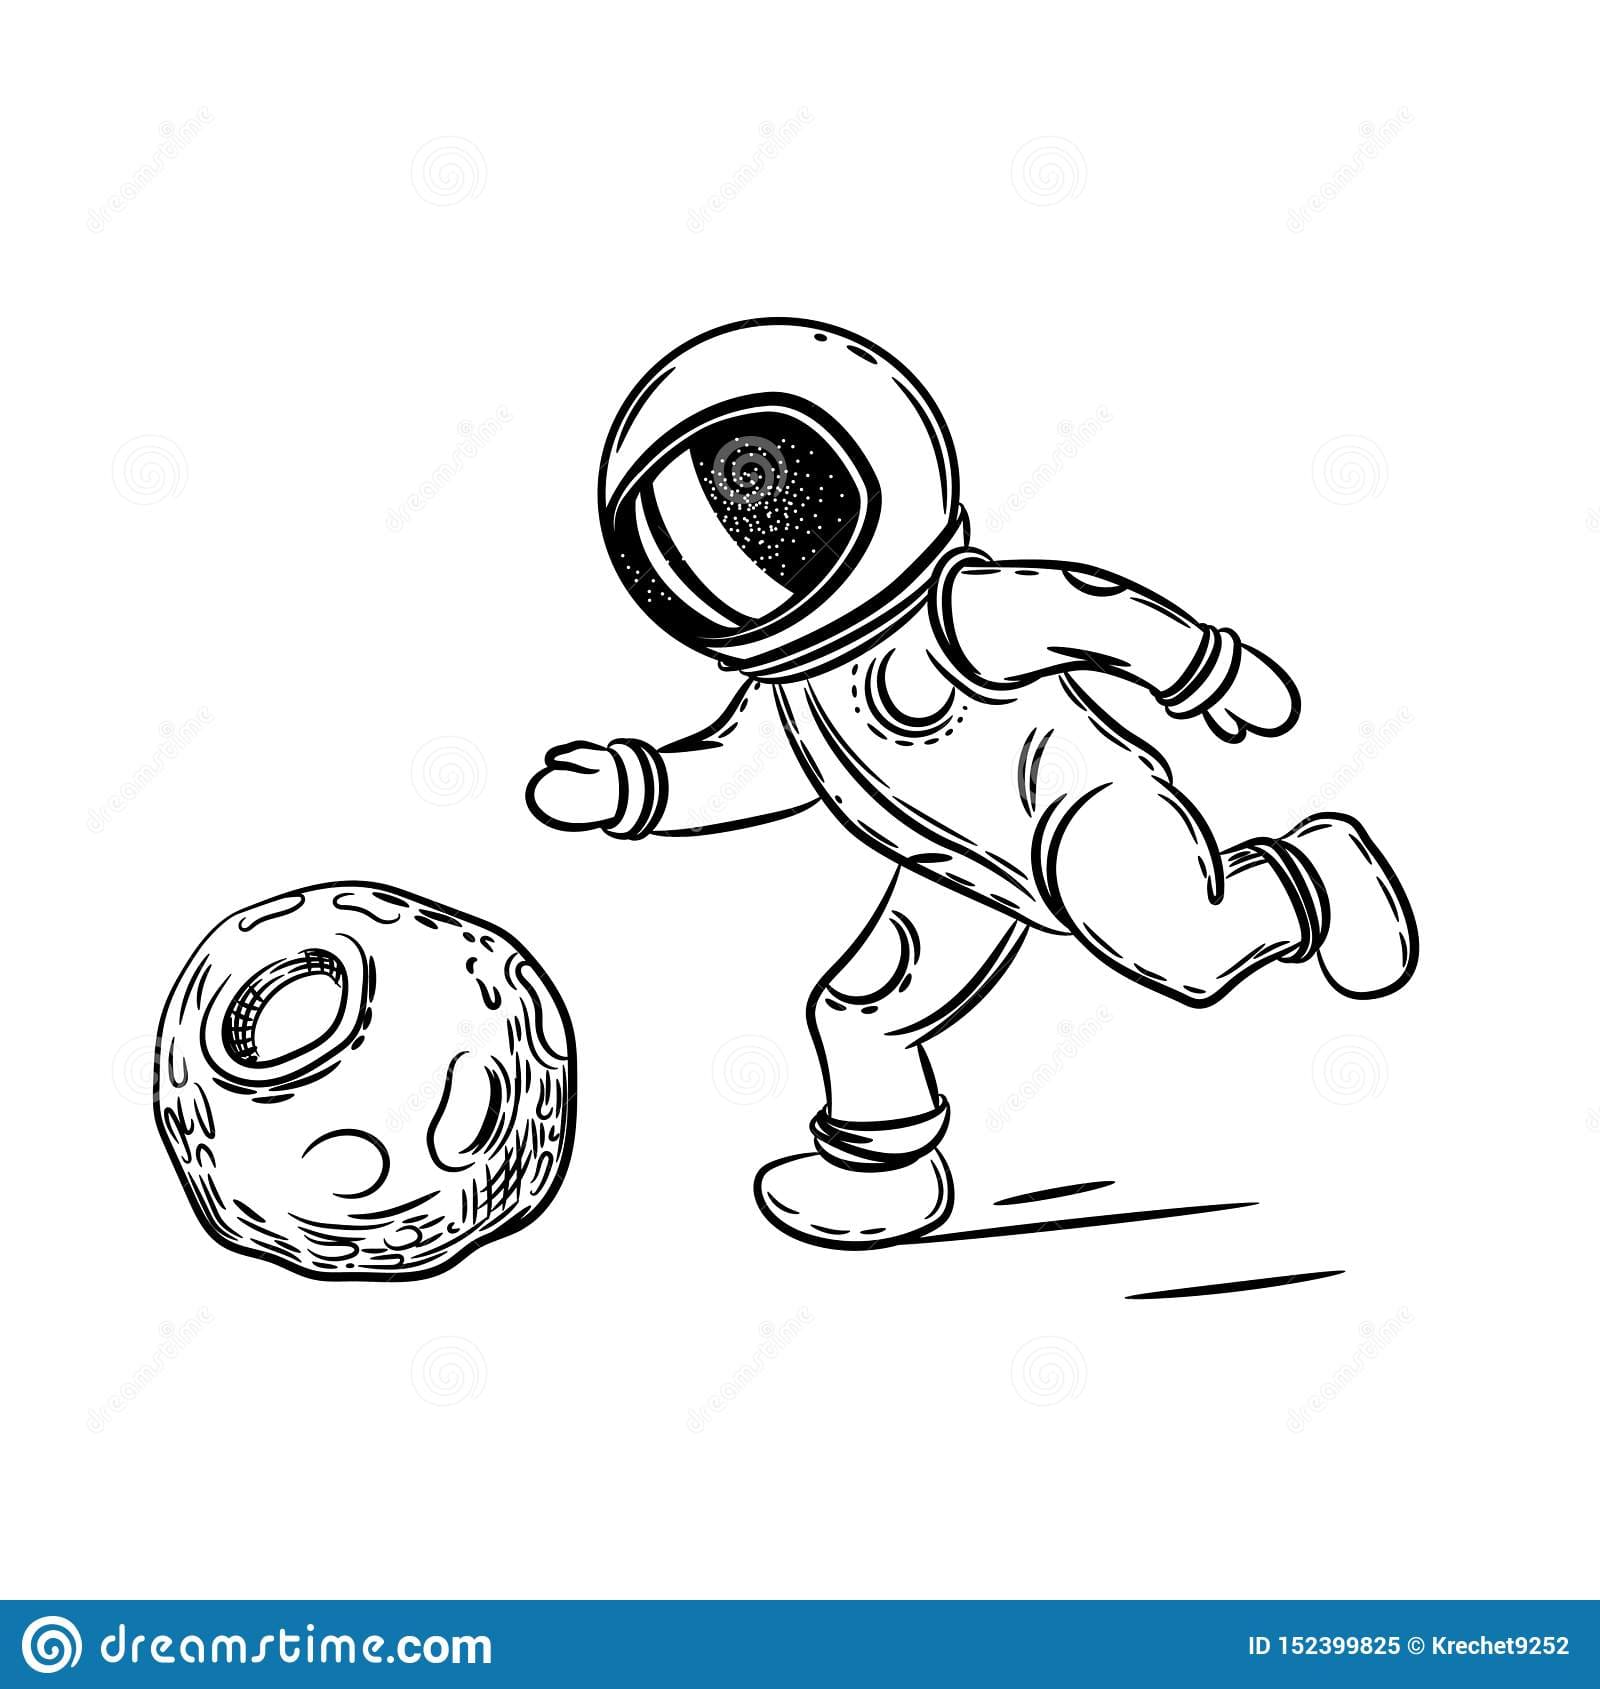 Astronaut plays football